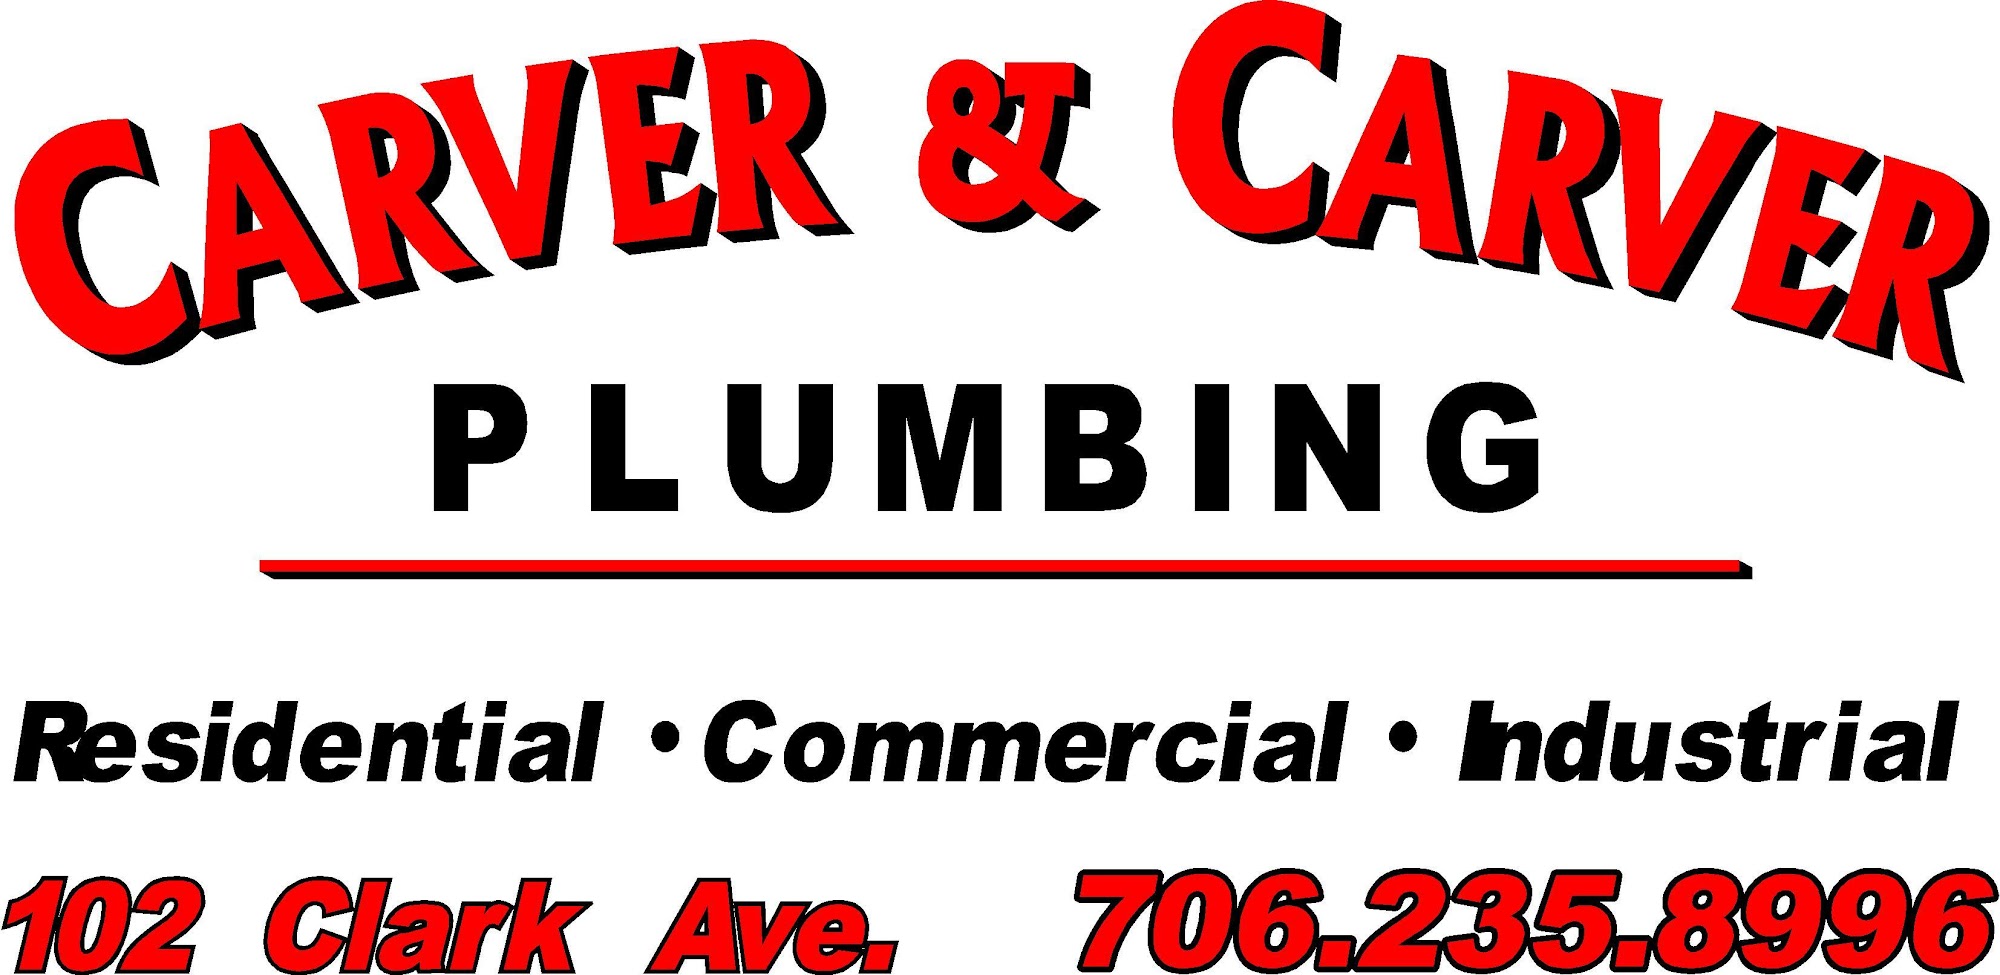 Carver & Carver Plumbing, Inc